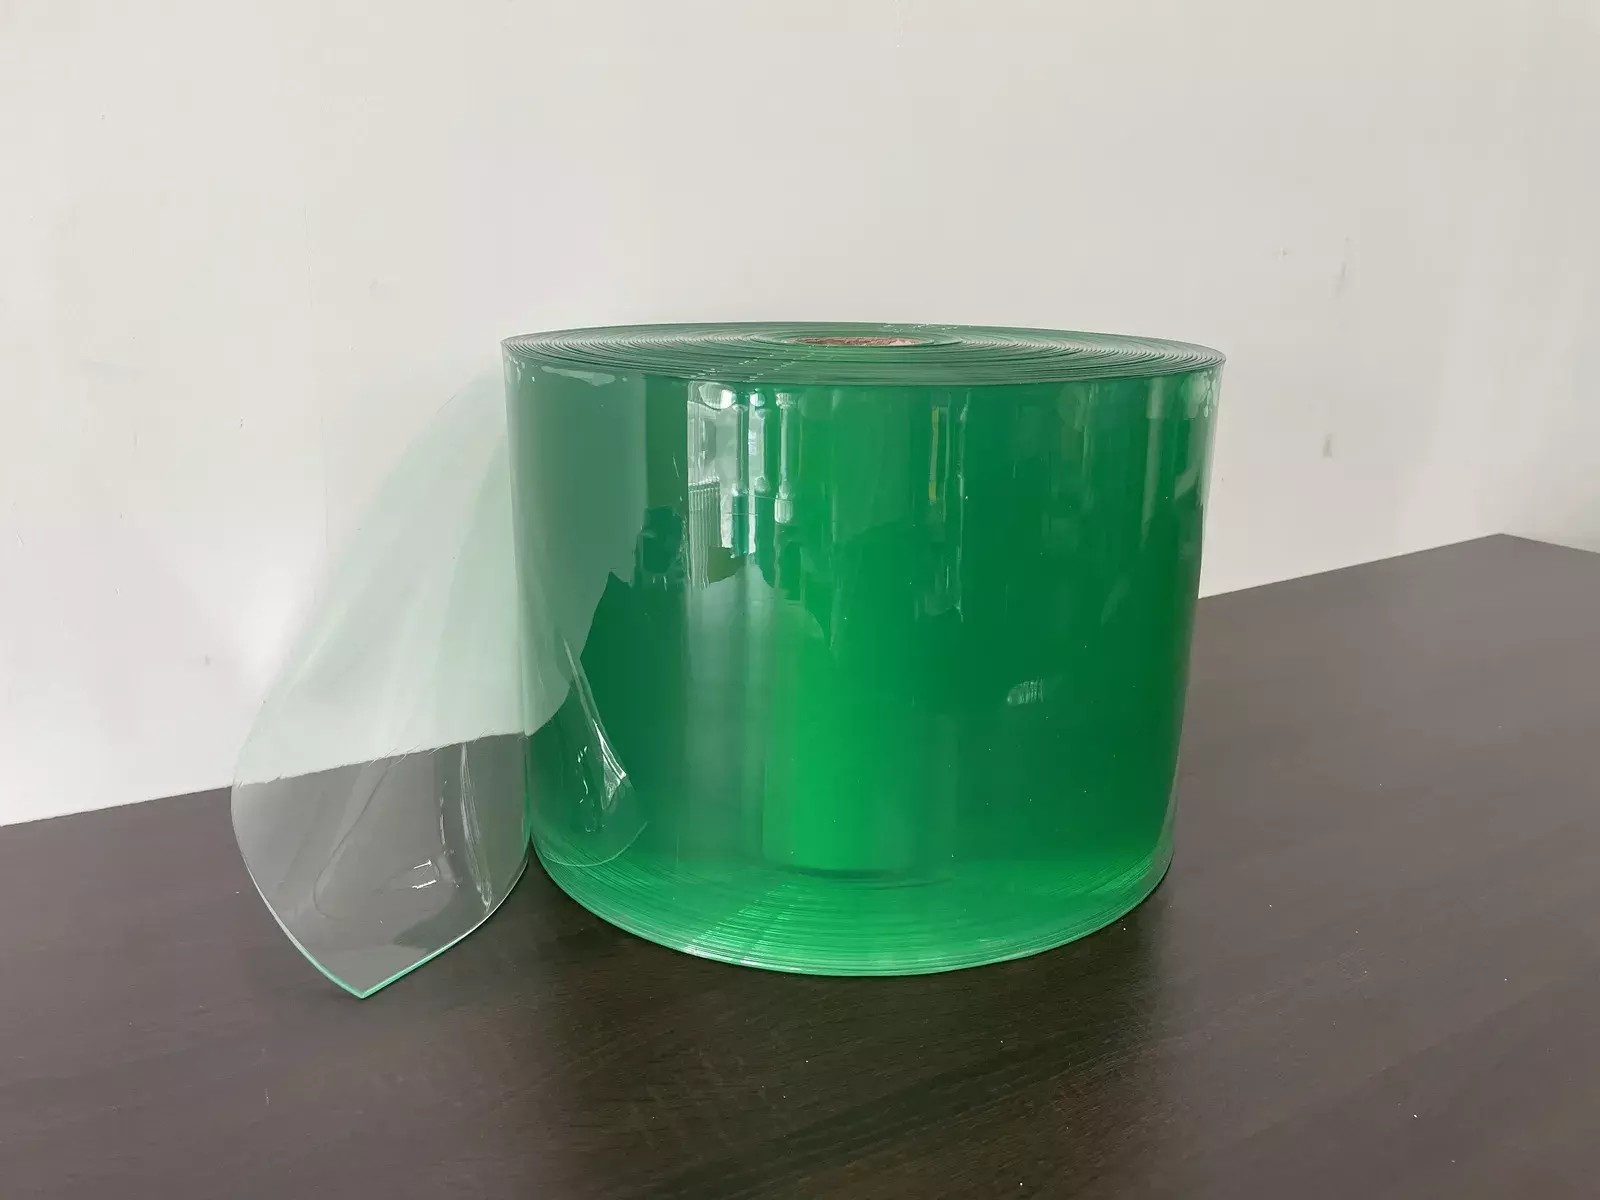 ПВХ завеса рулон прозрачная морозостойкая 3x300 (5м)